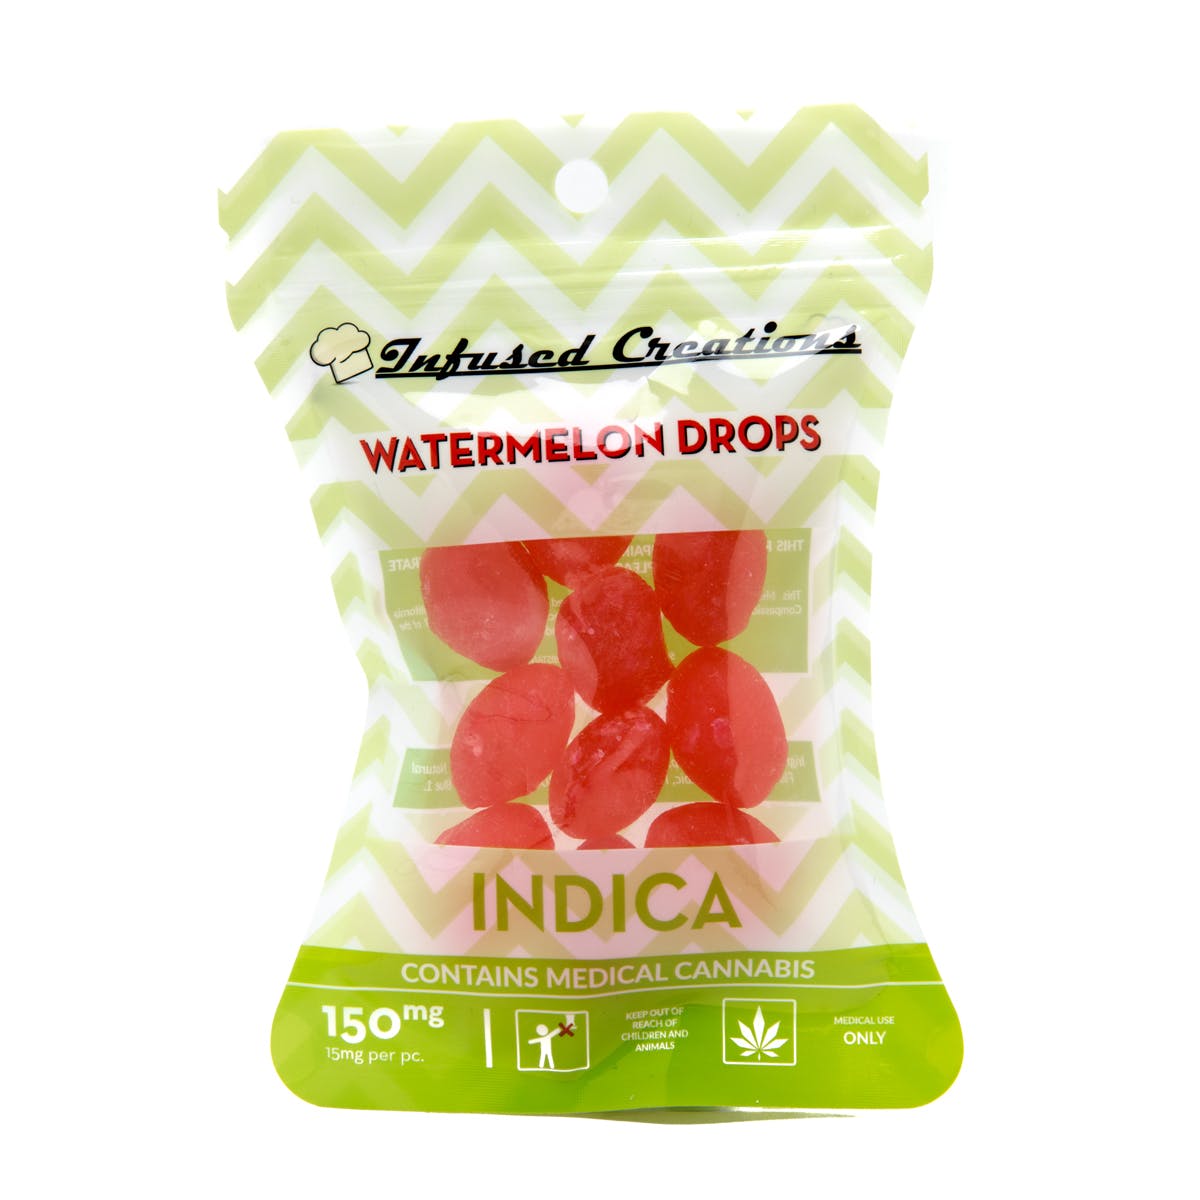 Watermelon Drops Indica, 150mg